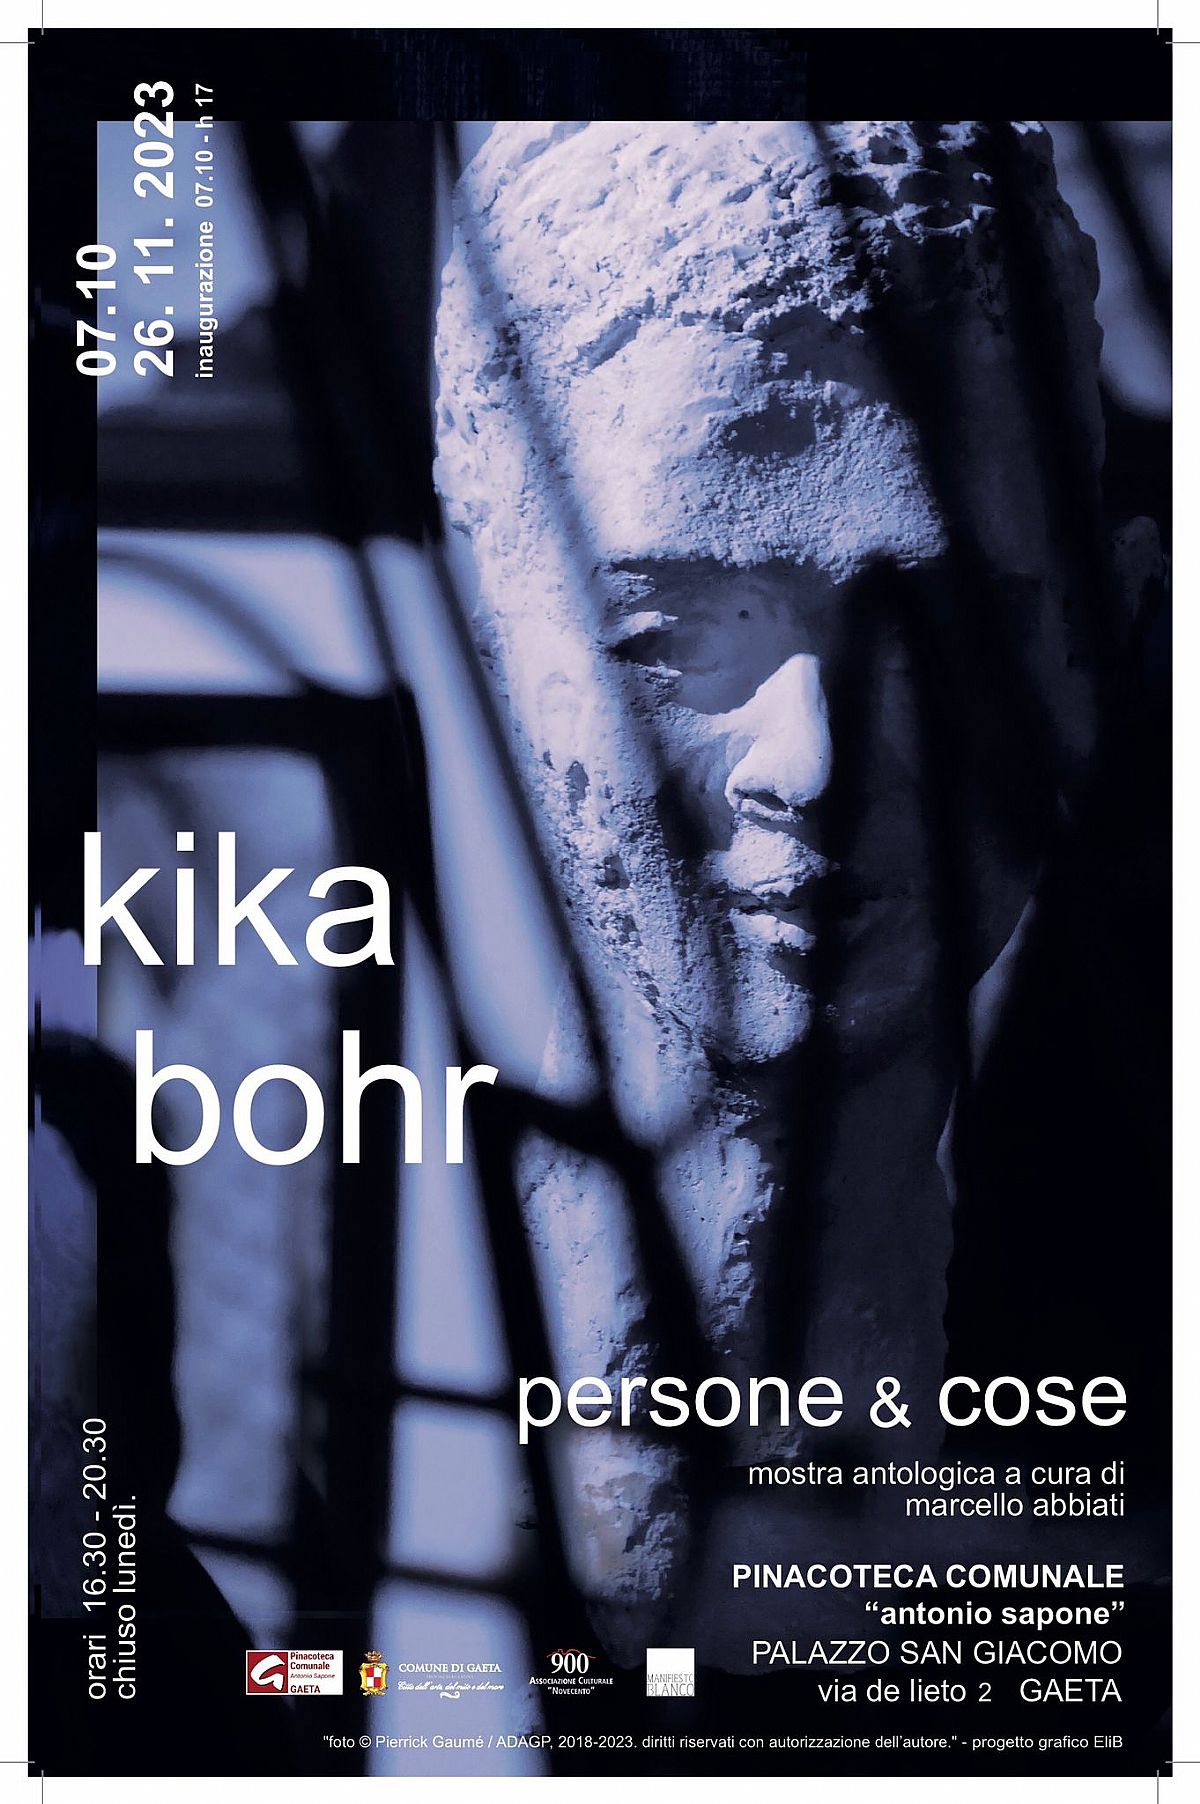 Mostra antologica PERSONE amp; COSE - Kika Bohr @ Pinacoteca Comunale di Gaeta